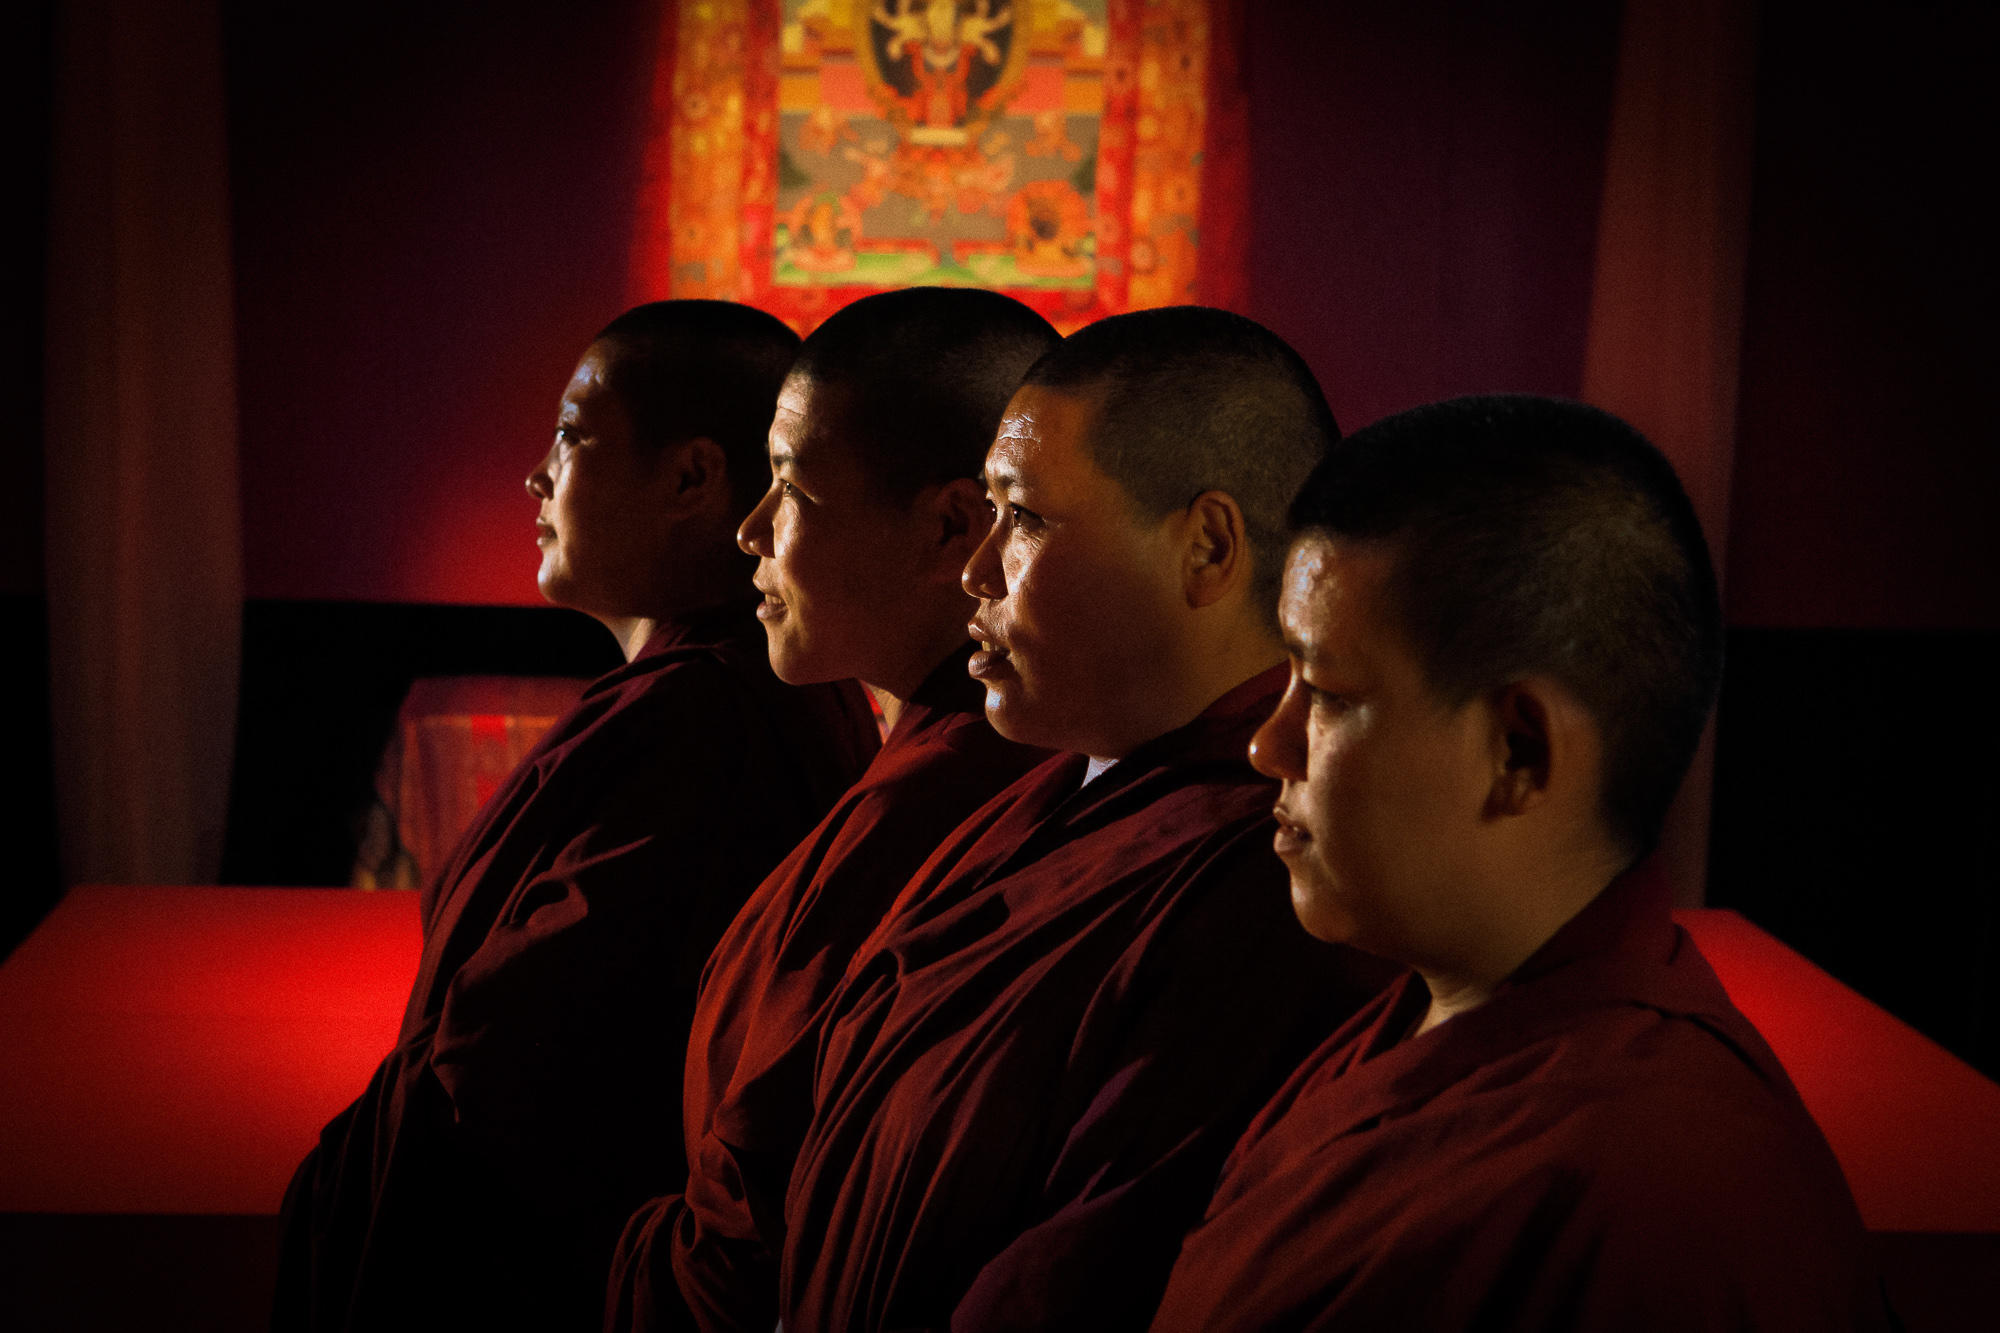 Tibetan Nuns visit Trinity College Hartford, CT. Photo copyright Miceli Productions. http://MiceliProductions.com